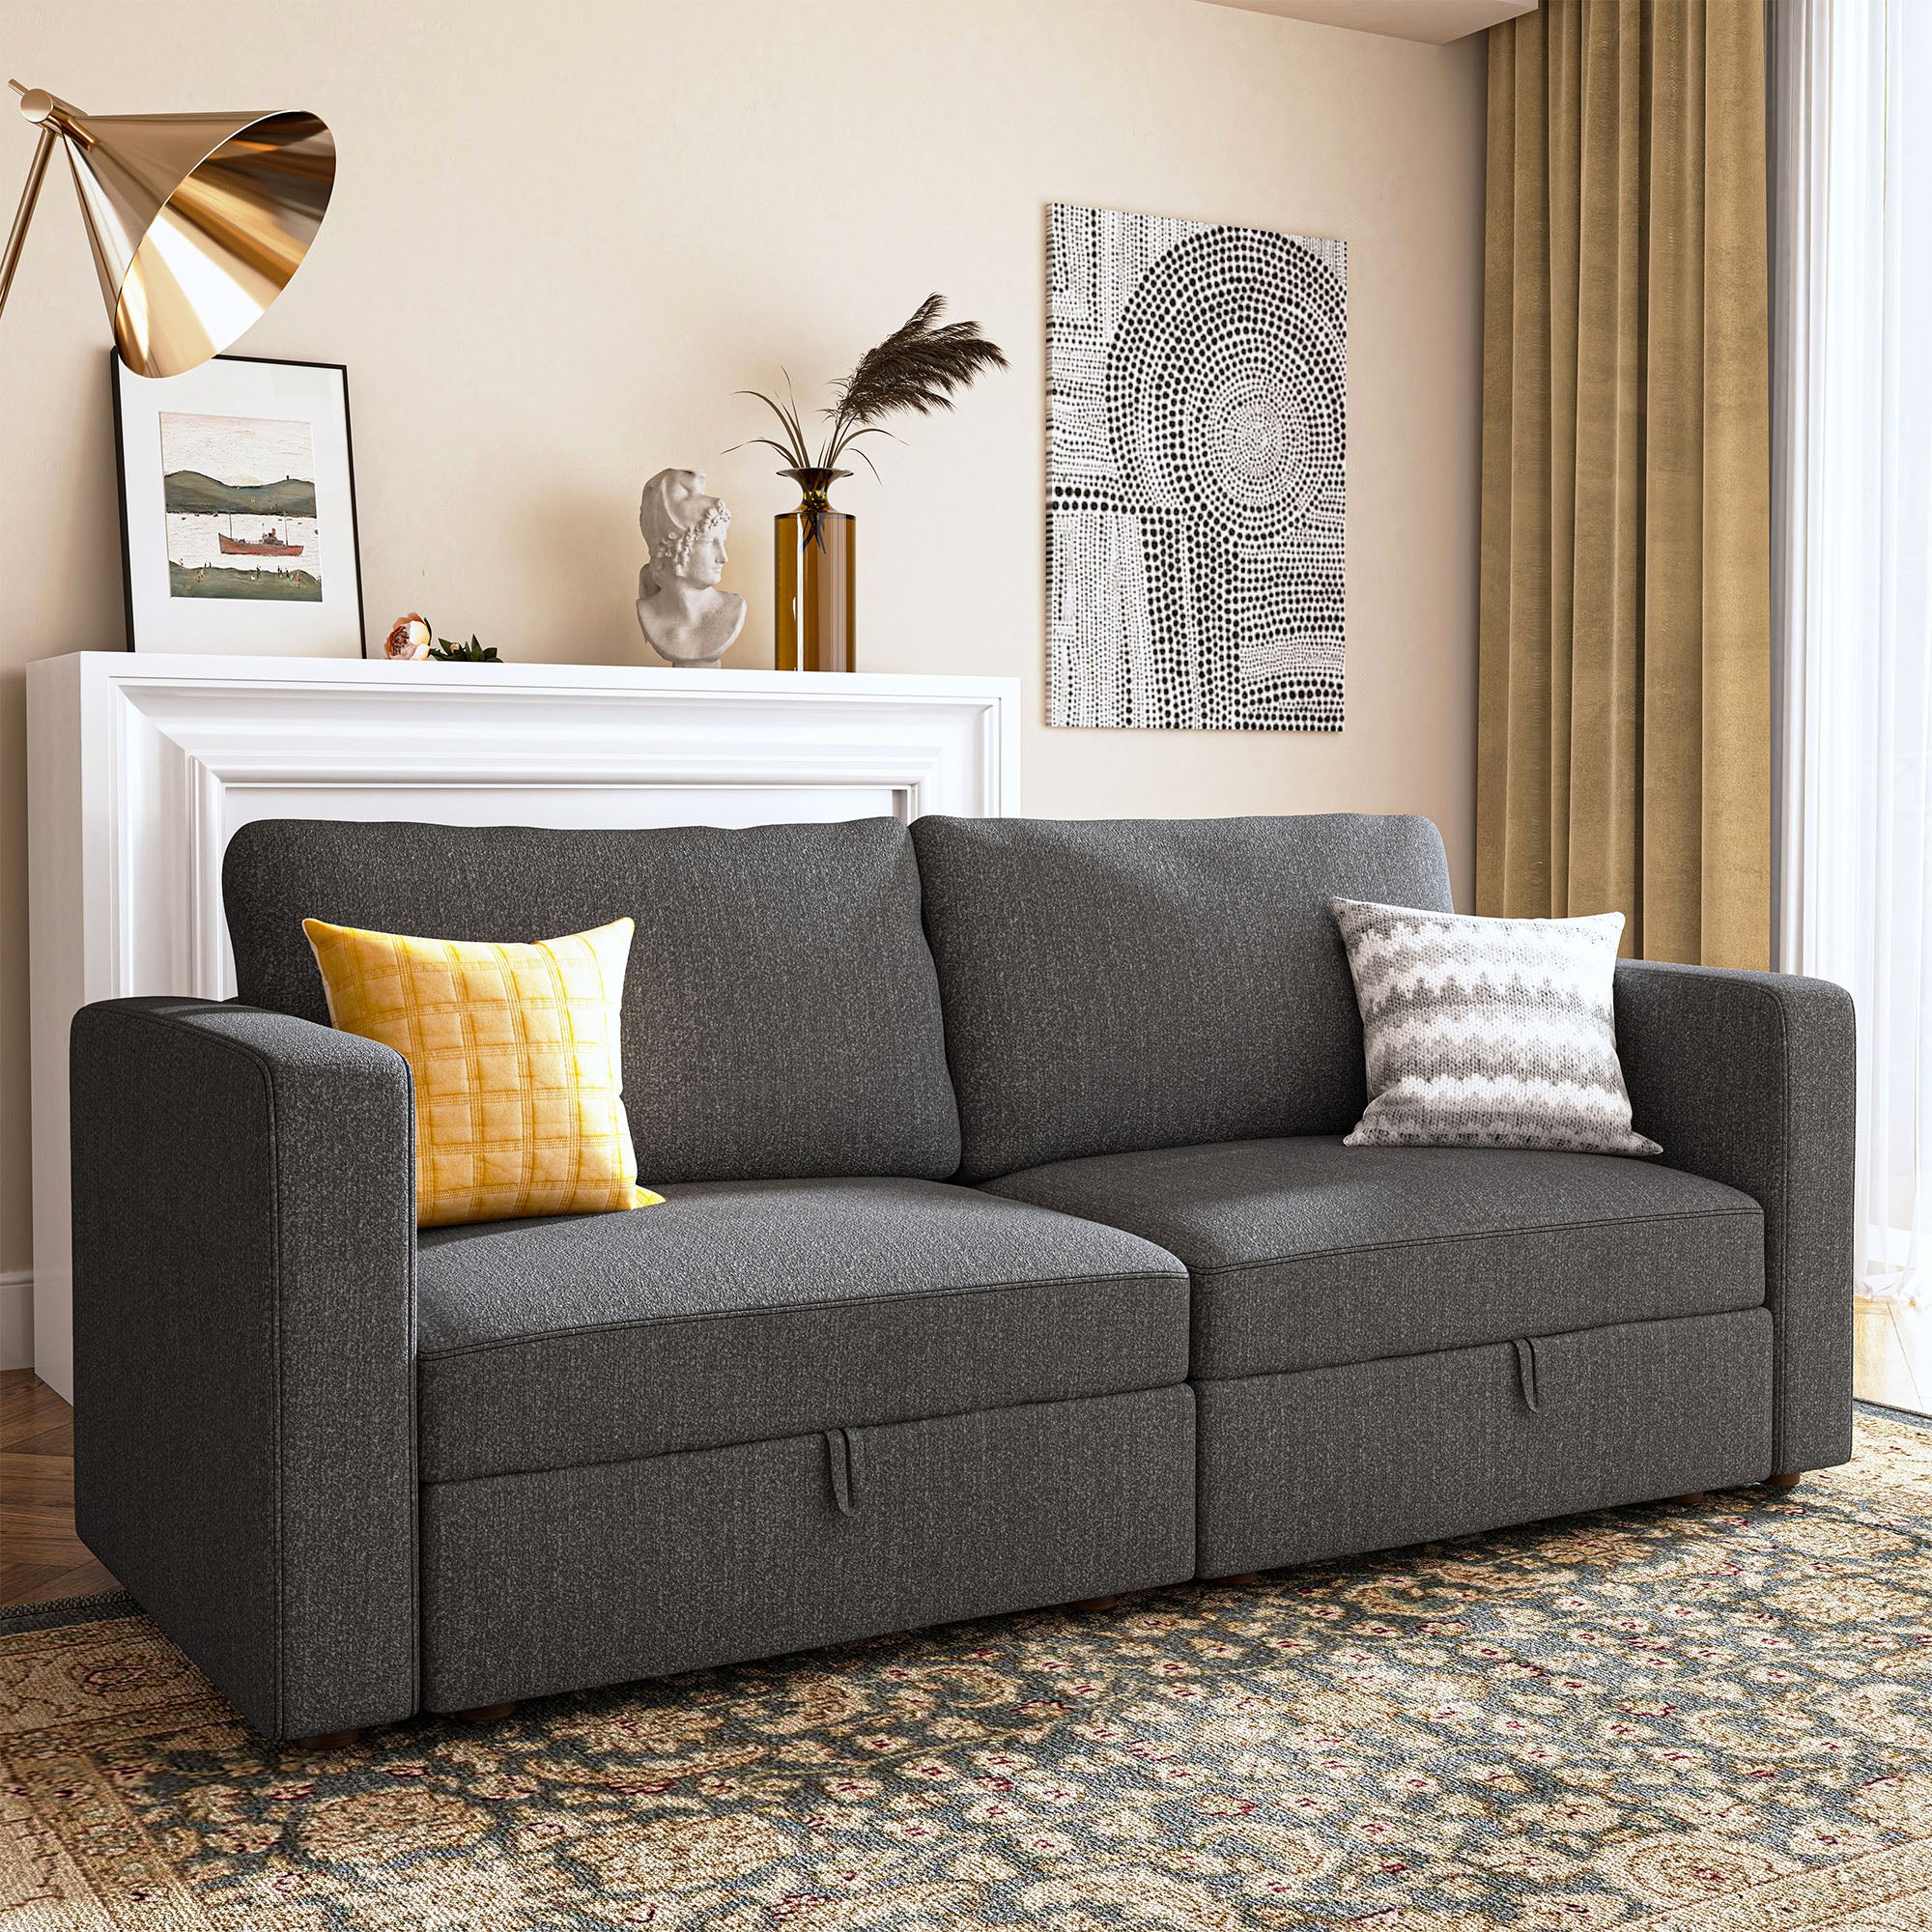 HONBAY Dark Grey Fabric Modular Loveseat Sofa for Living Room